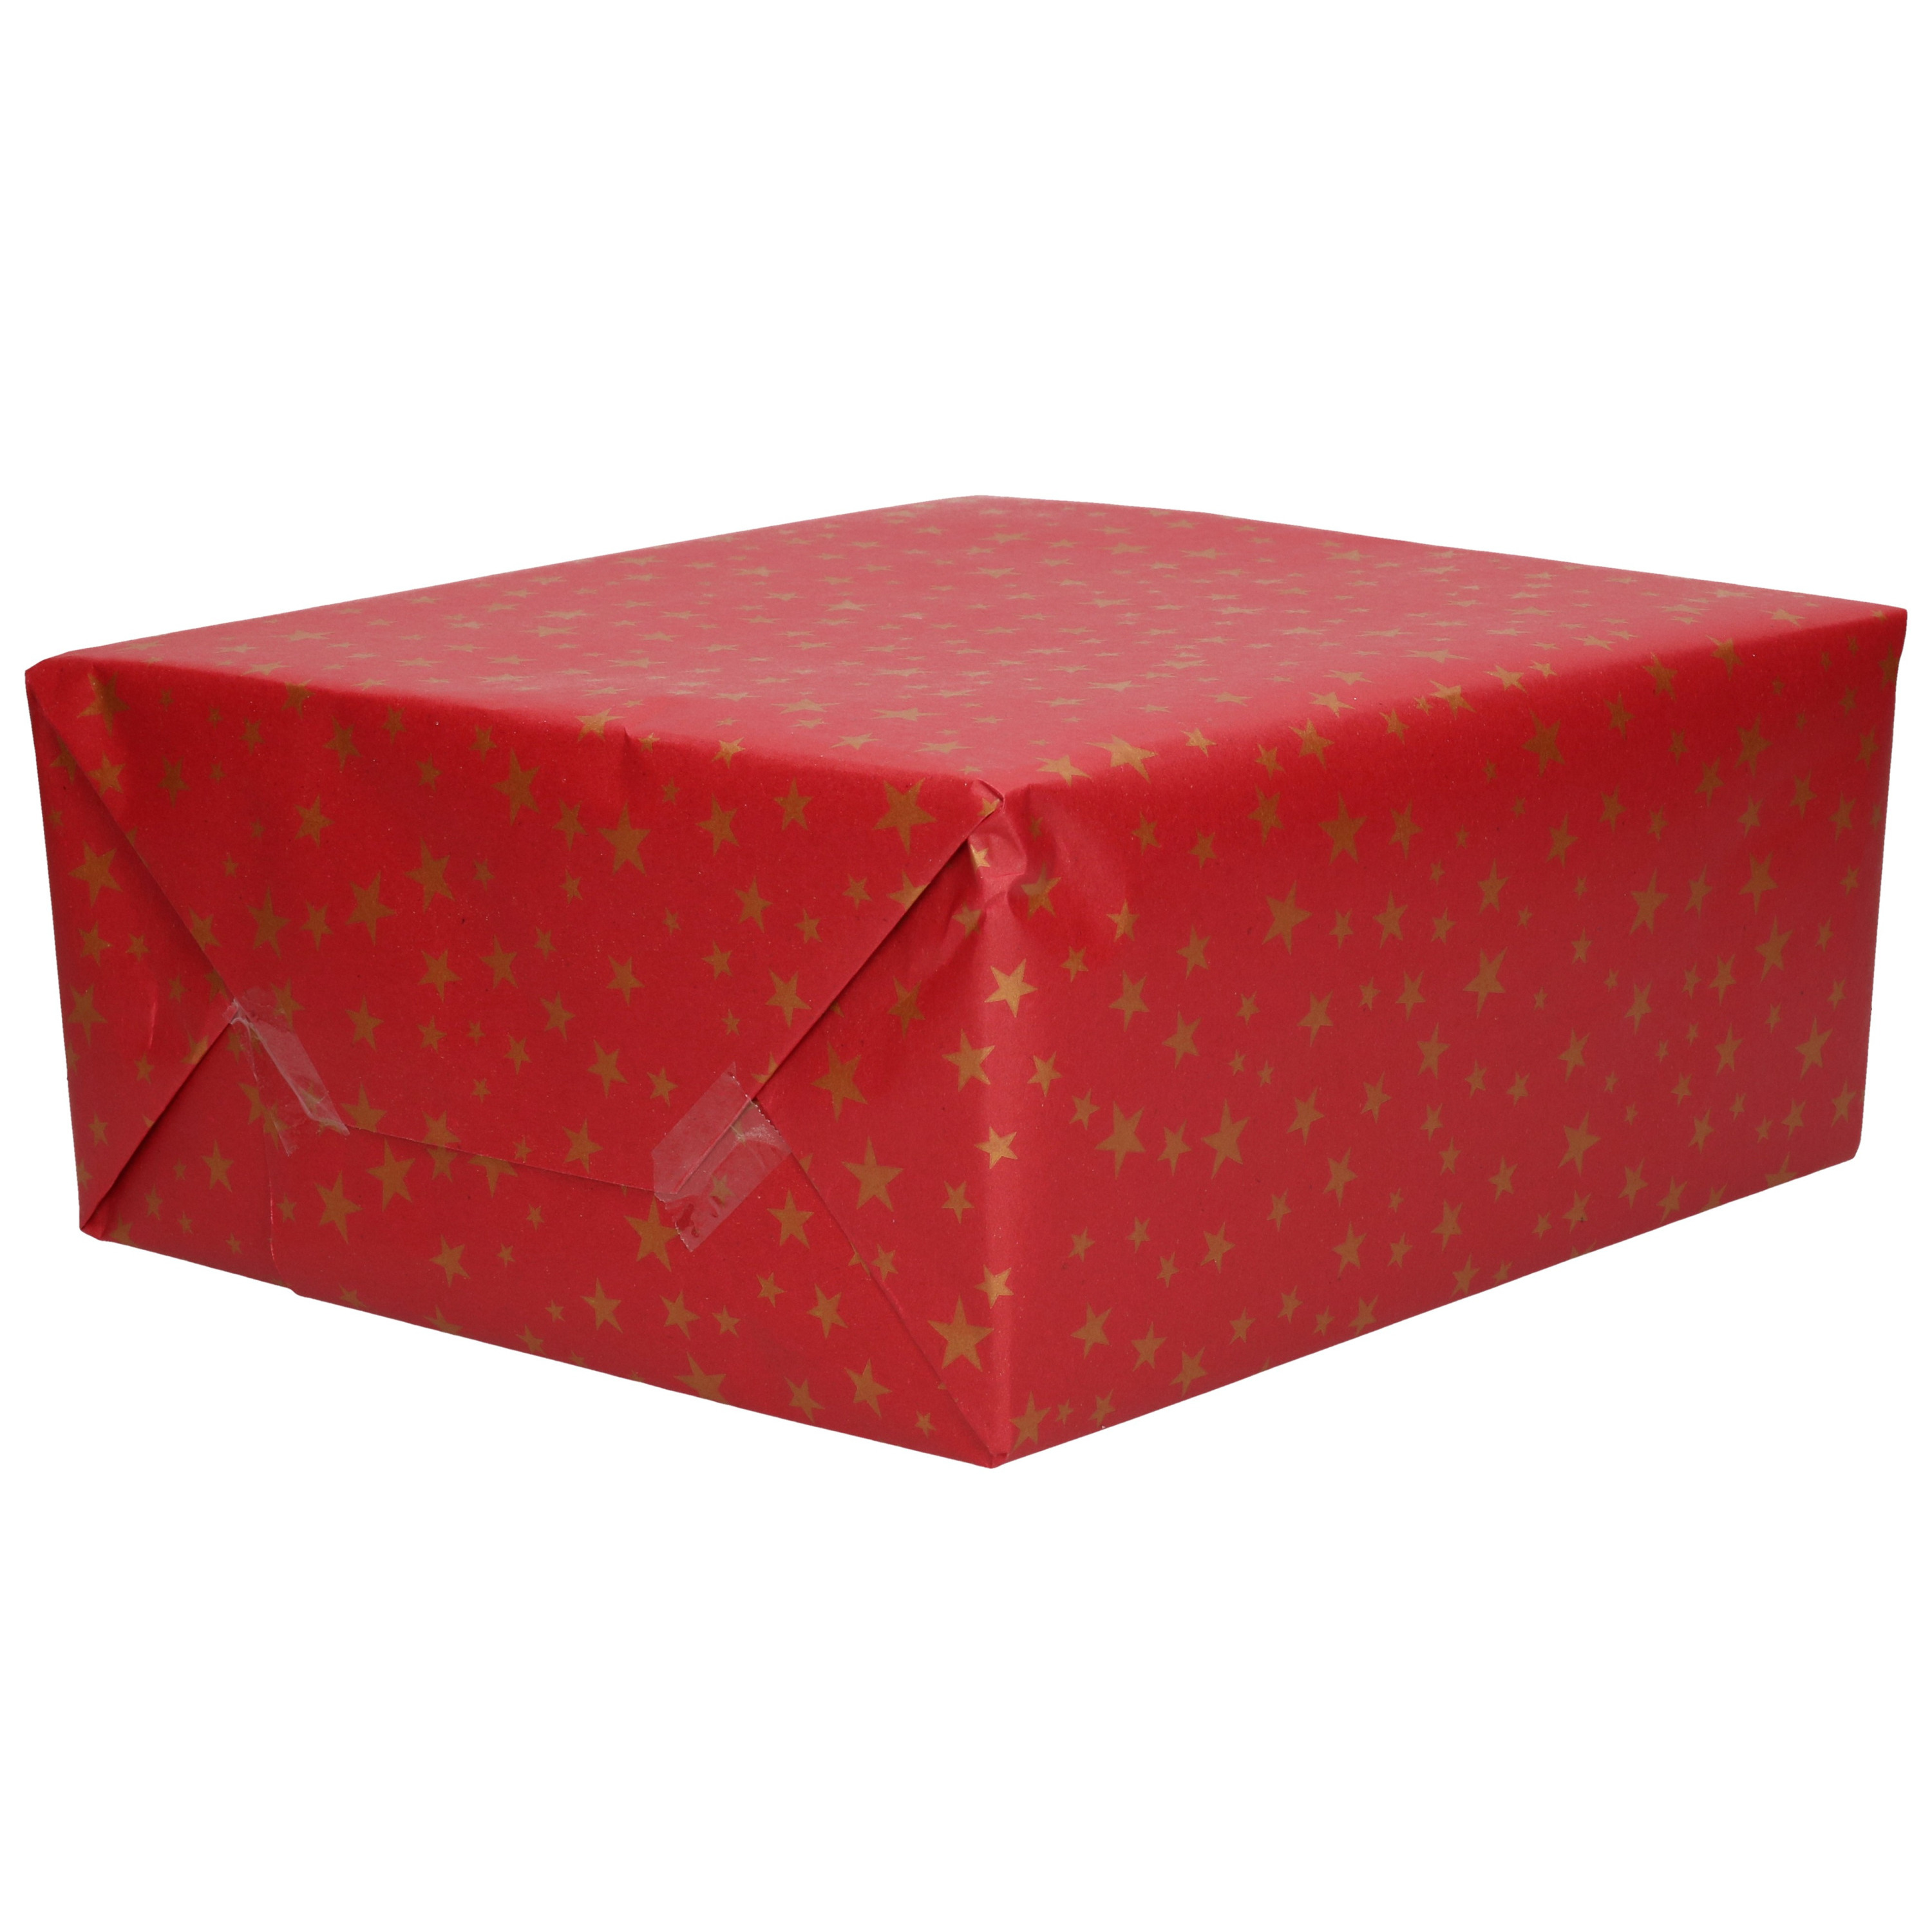 1x Rollen Kerst inpakpapier-cadeaupapier bordeaux rood 2,5 x 0,7 meter